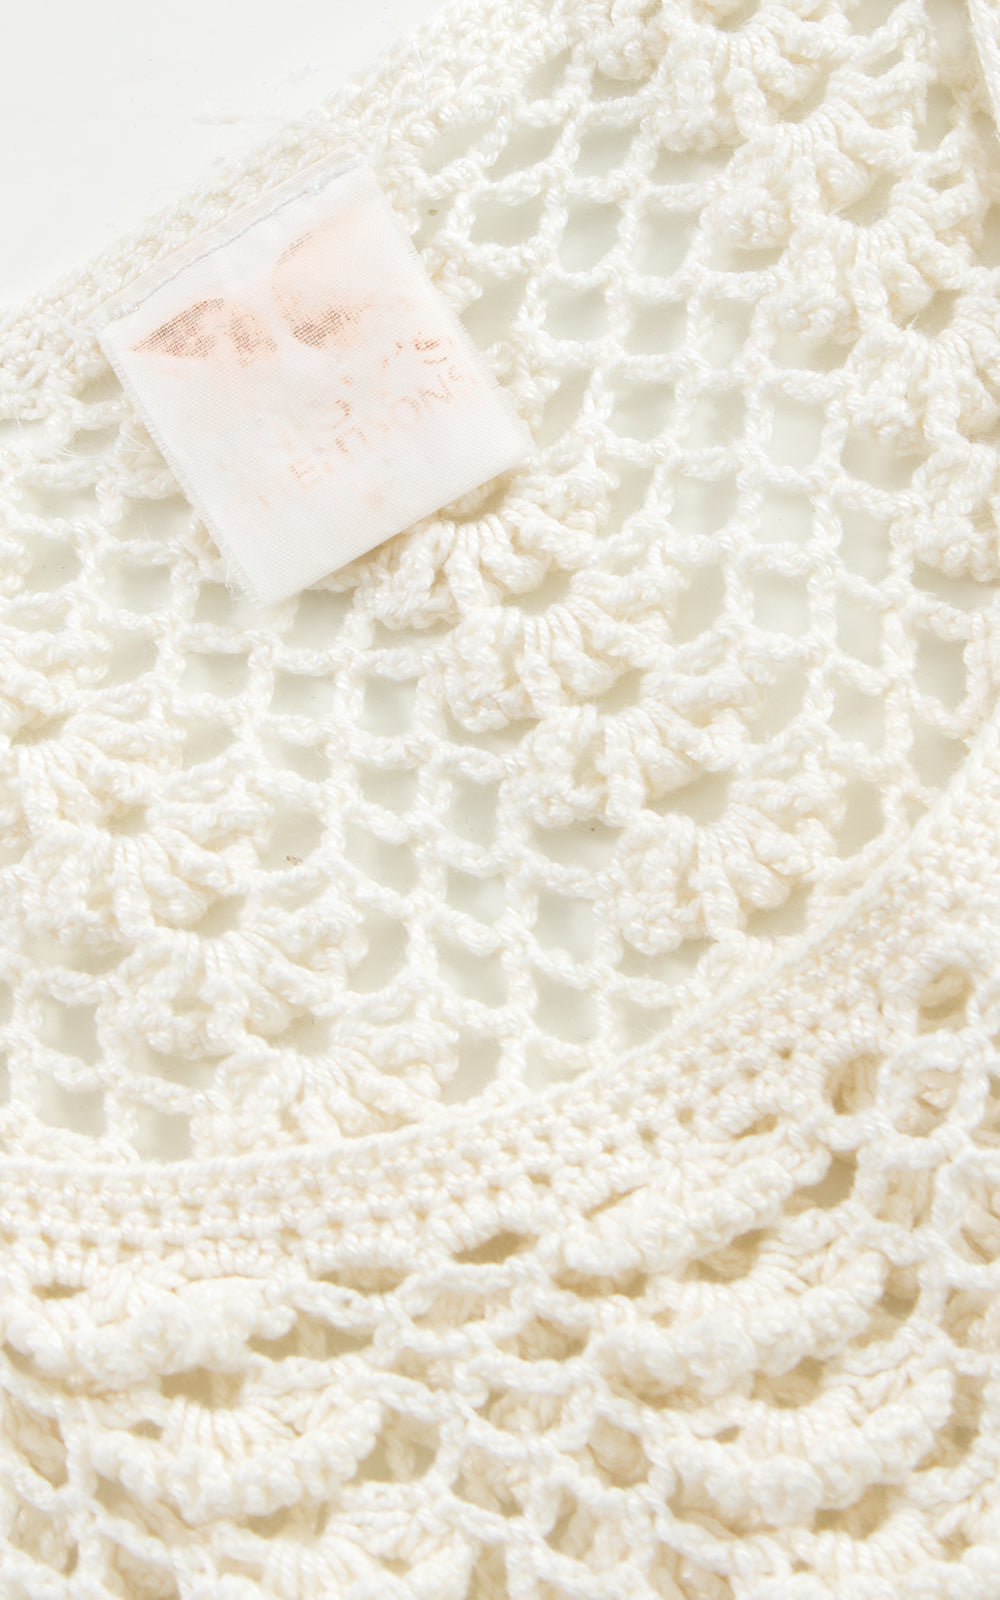 1970s Cream Crochet Dress